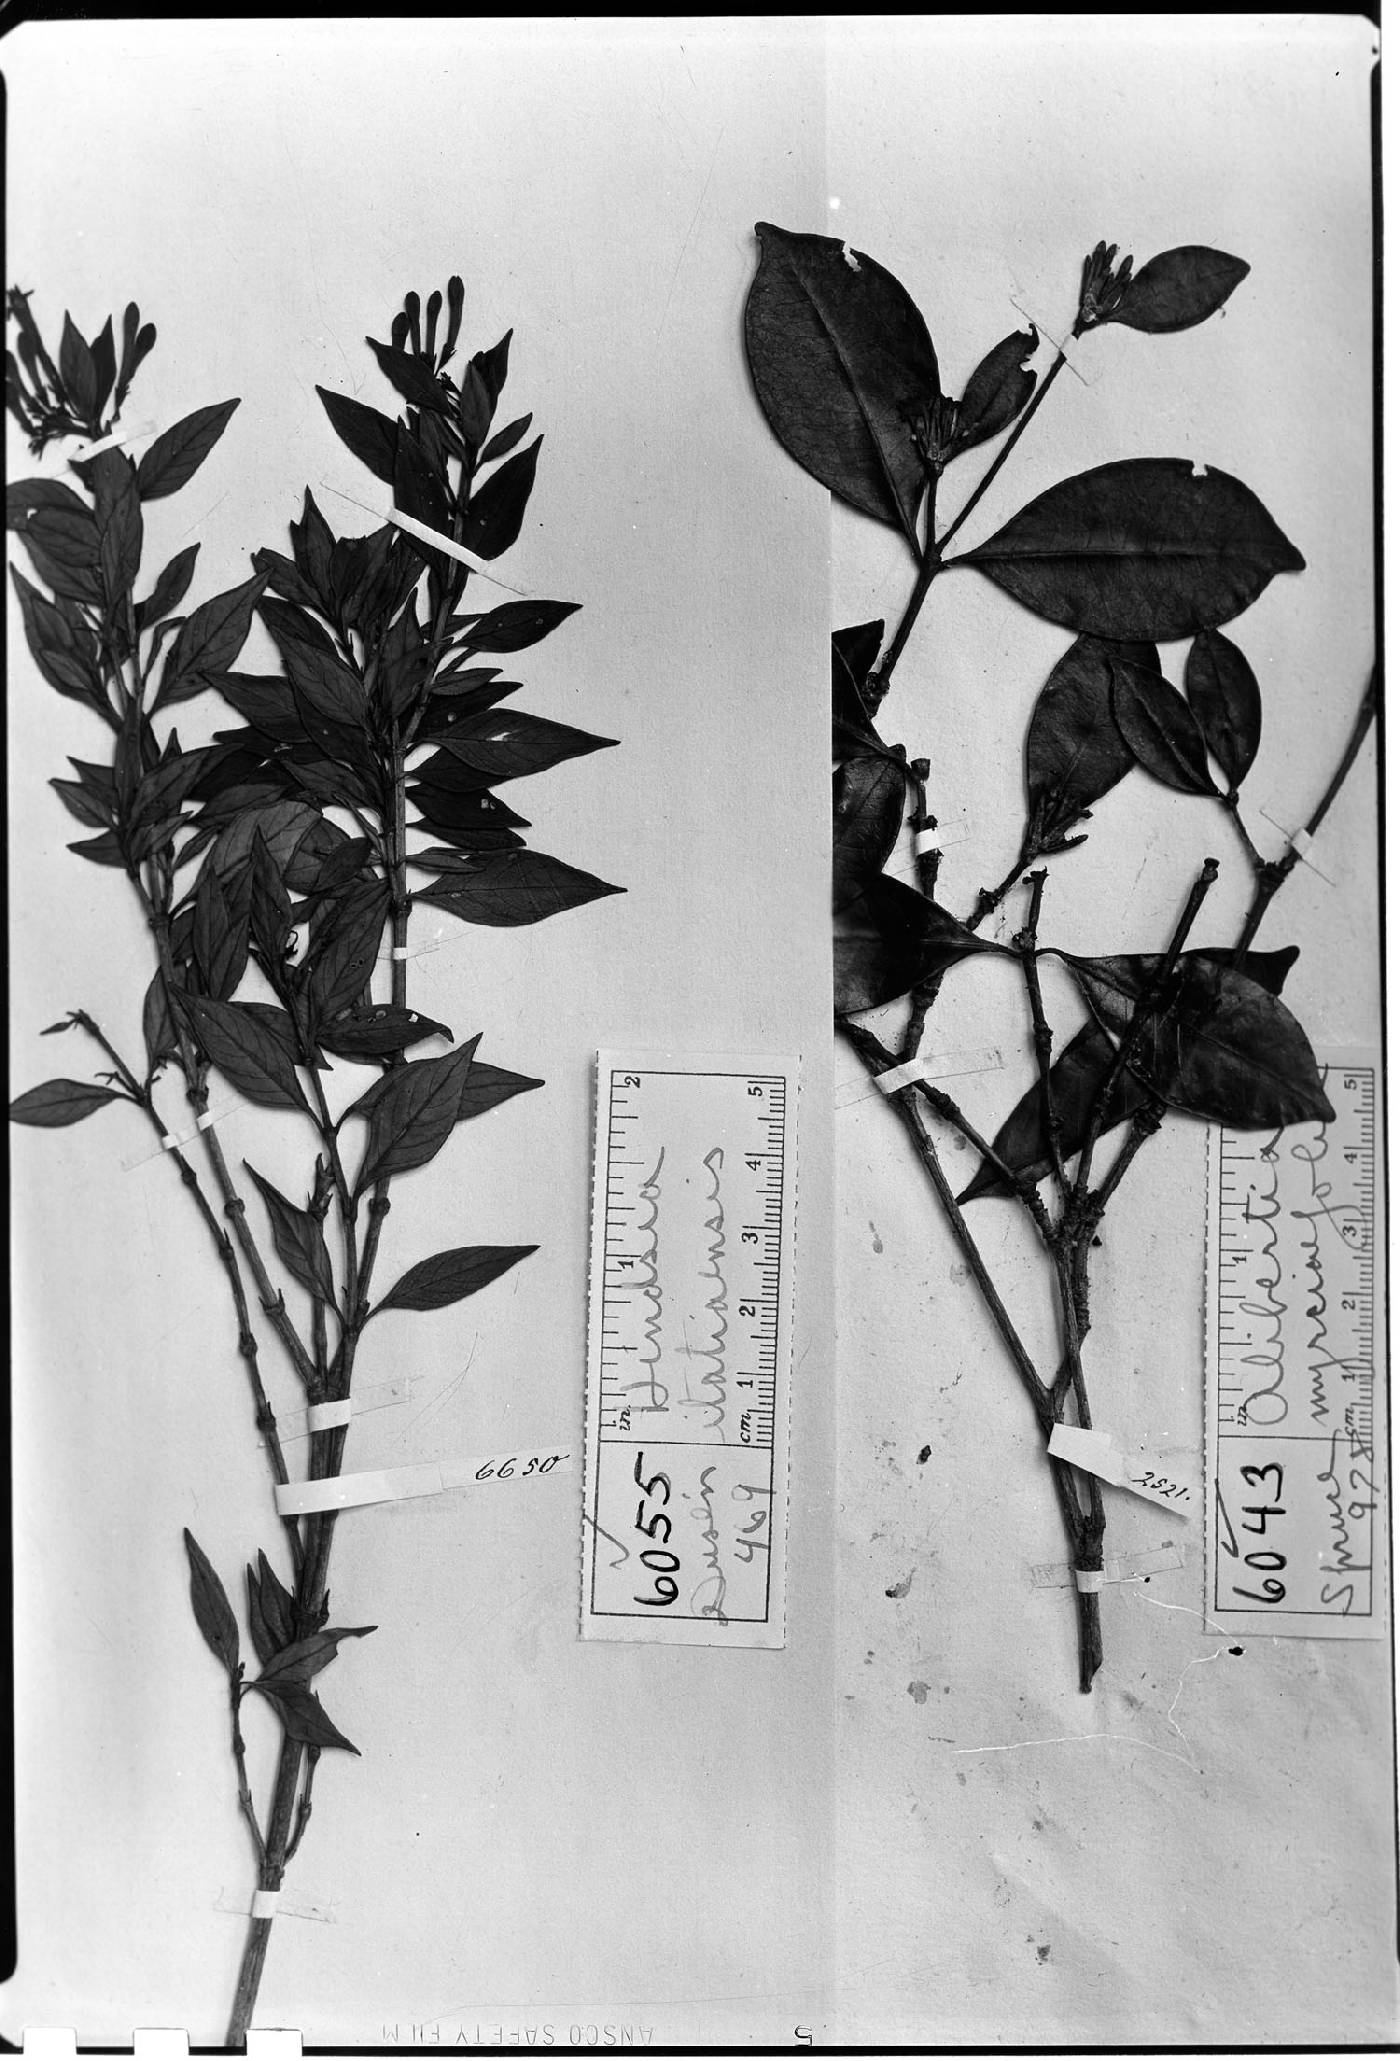 Alibertia myrciifolia image